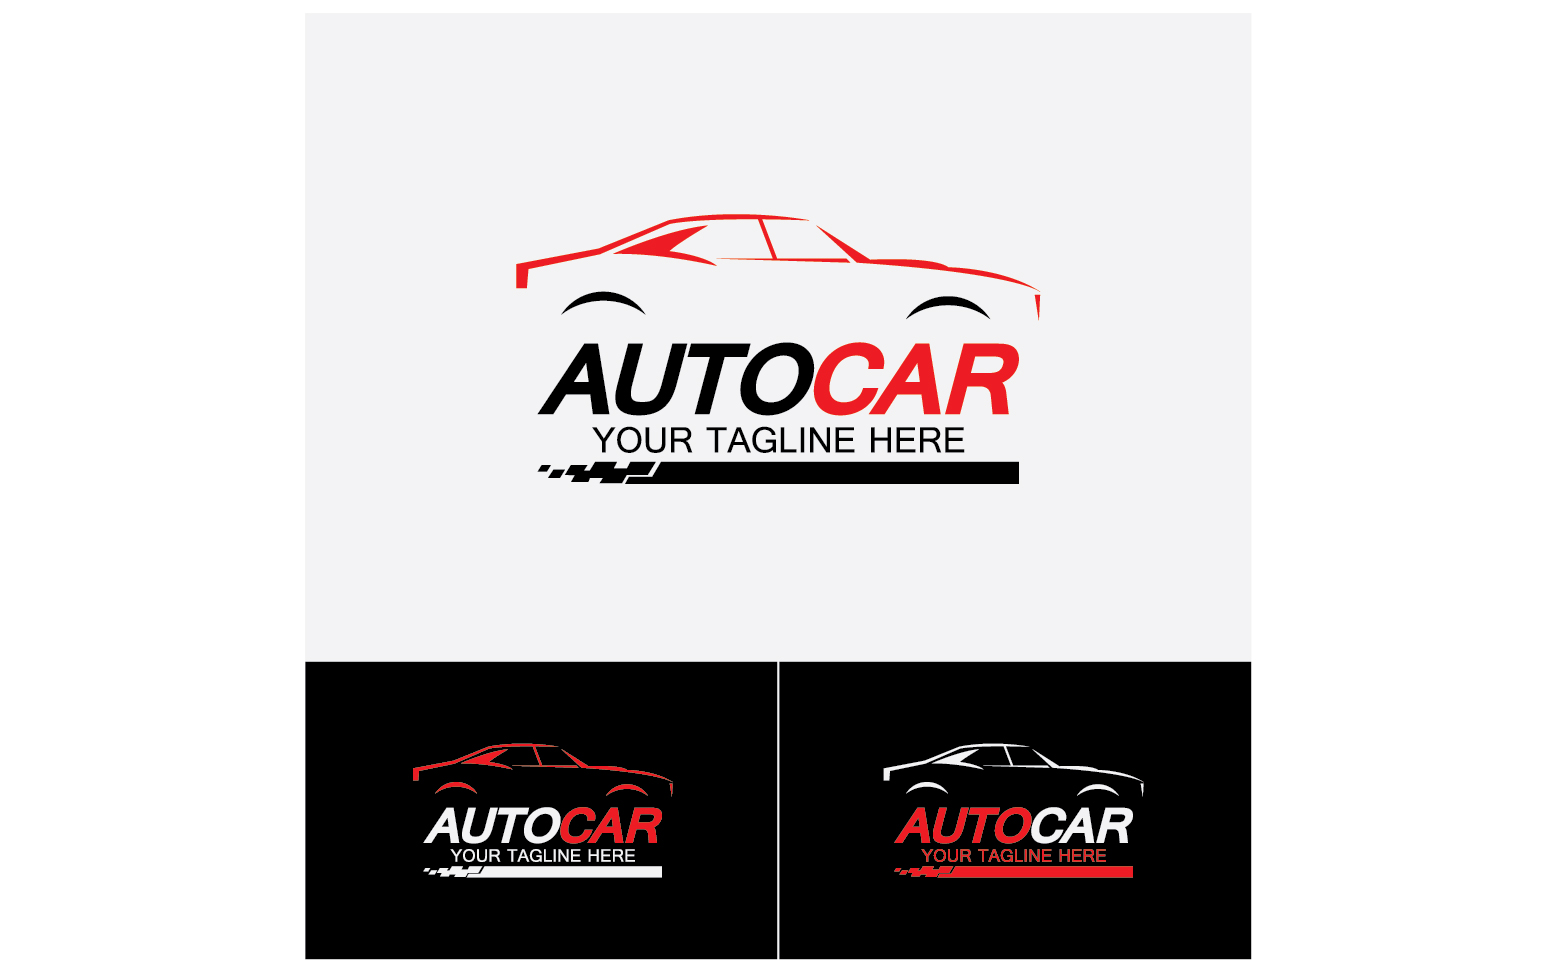 Cars dealer, automotive, autocar logo design inspiration. v33